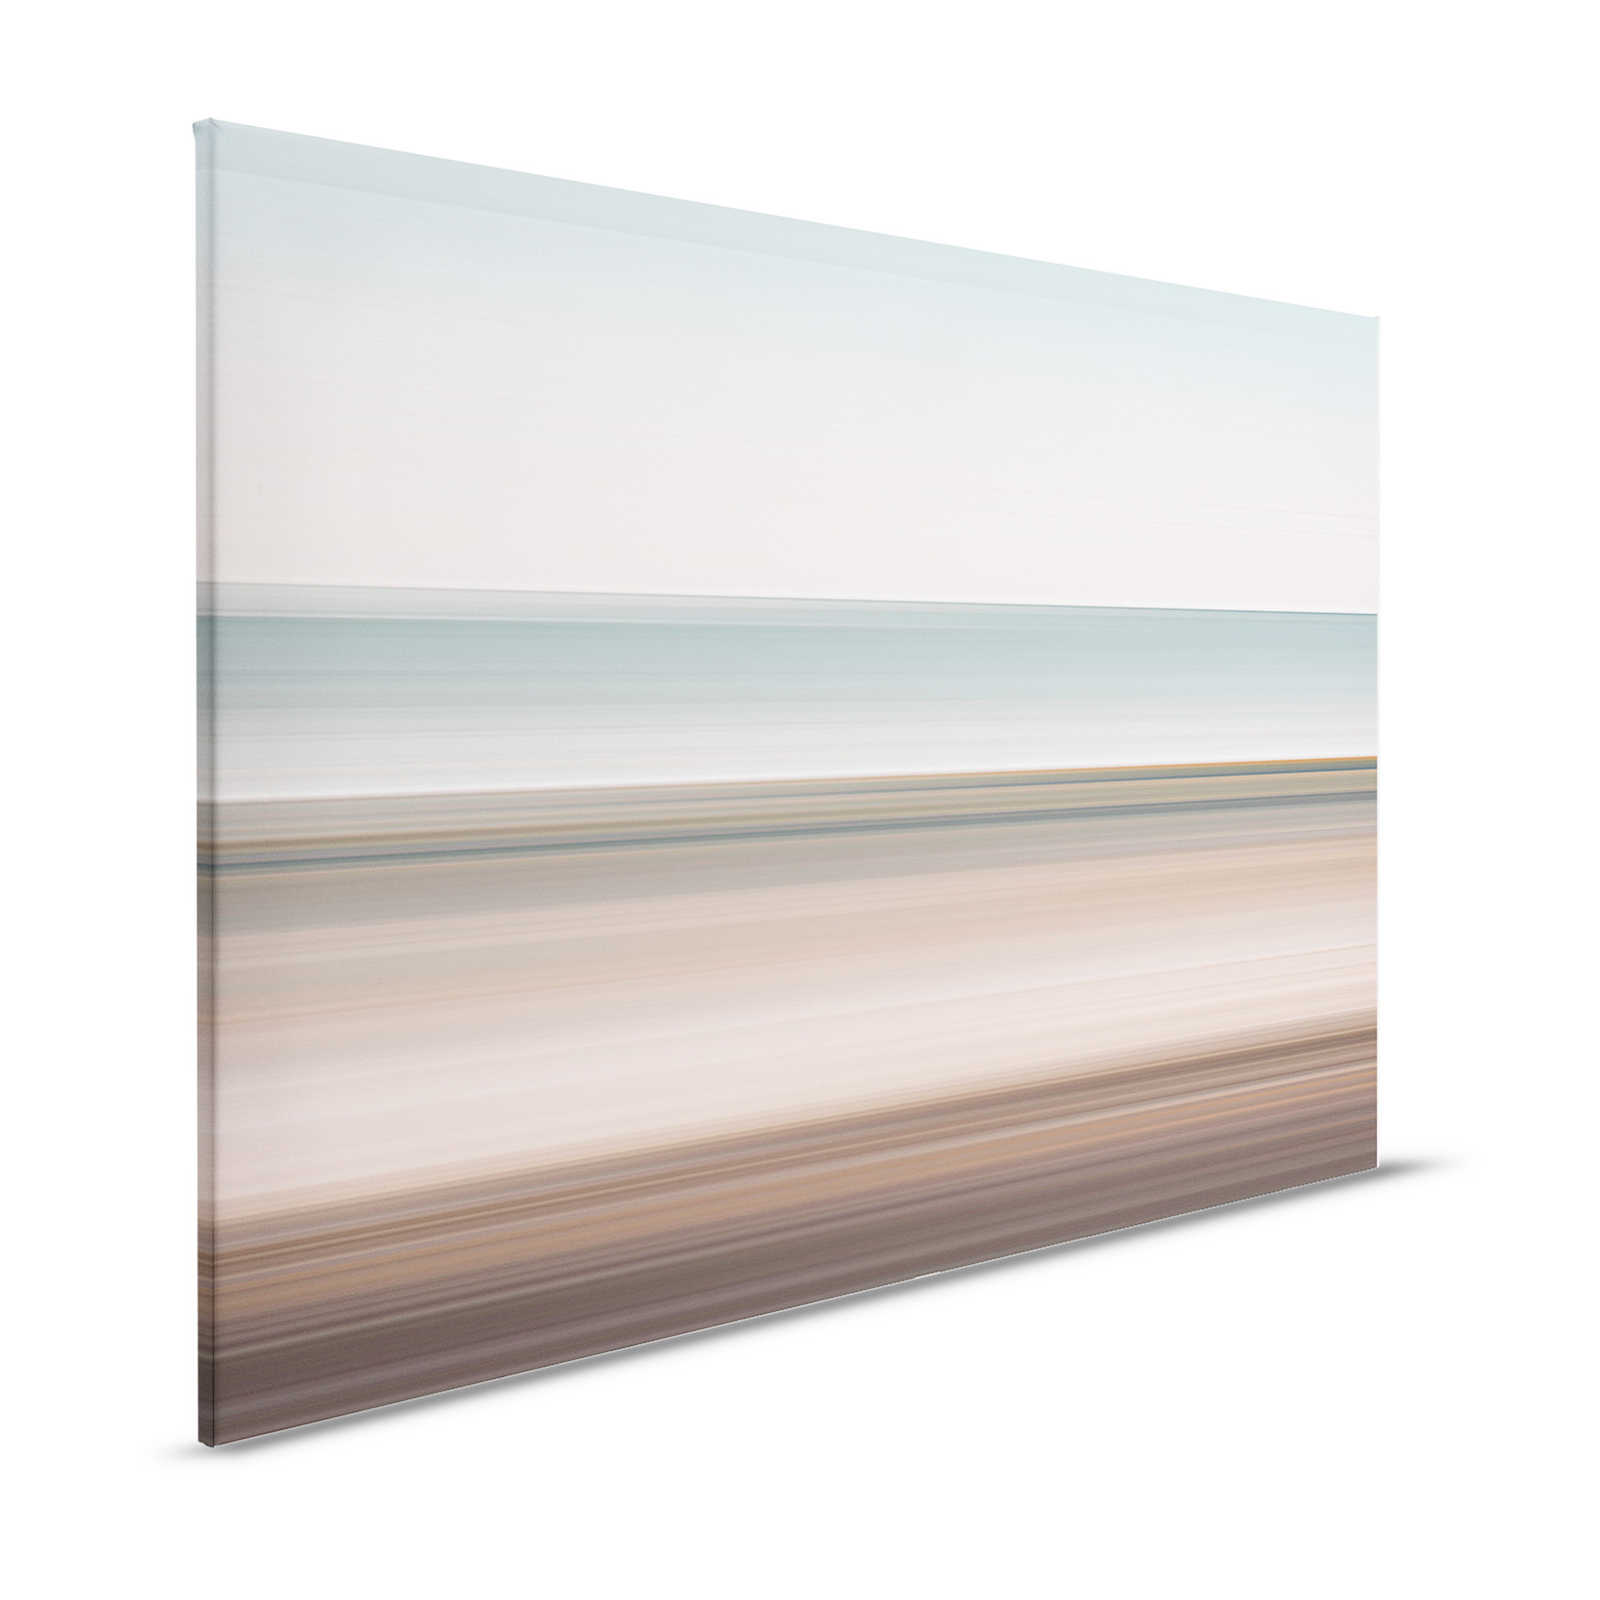 Horizon 2 - Lienzo paisaje abstracto con diseño de líneas - 1,20 m x 0,80 m
